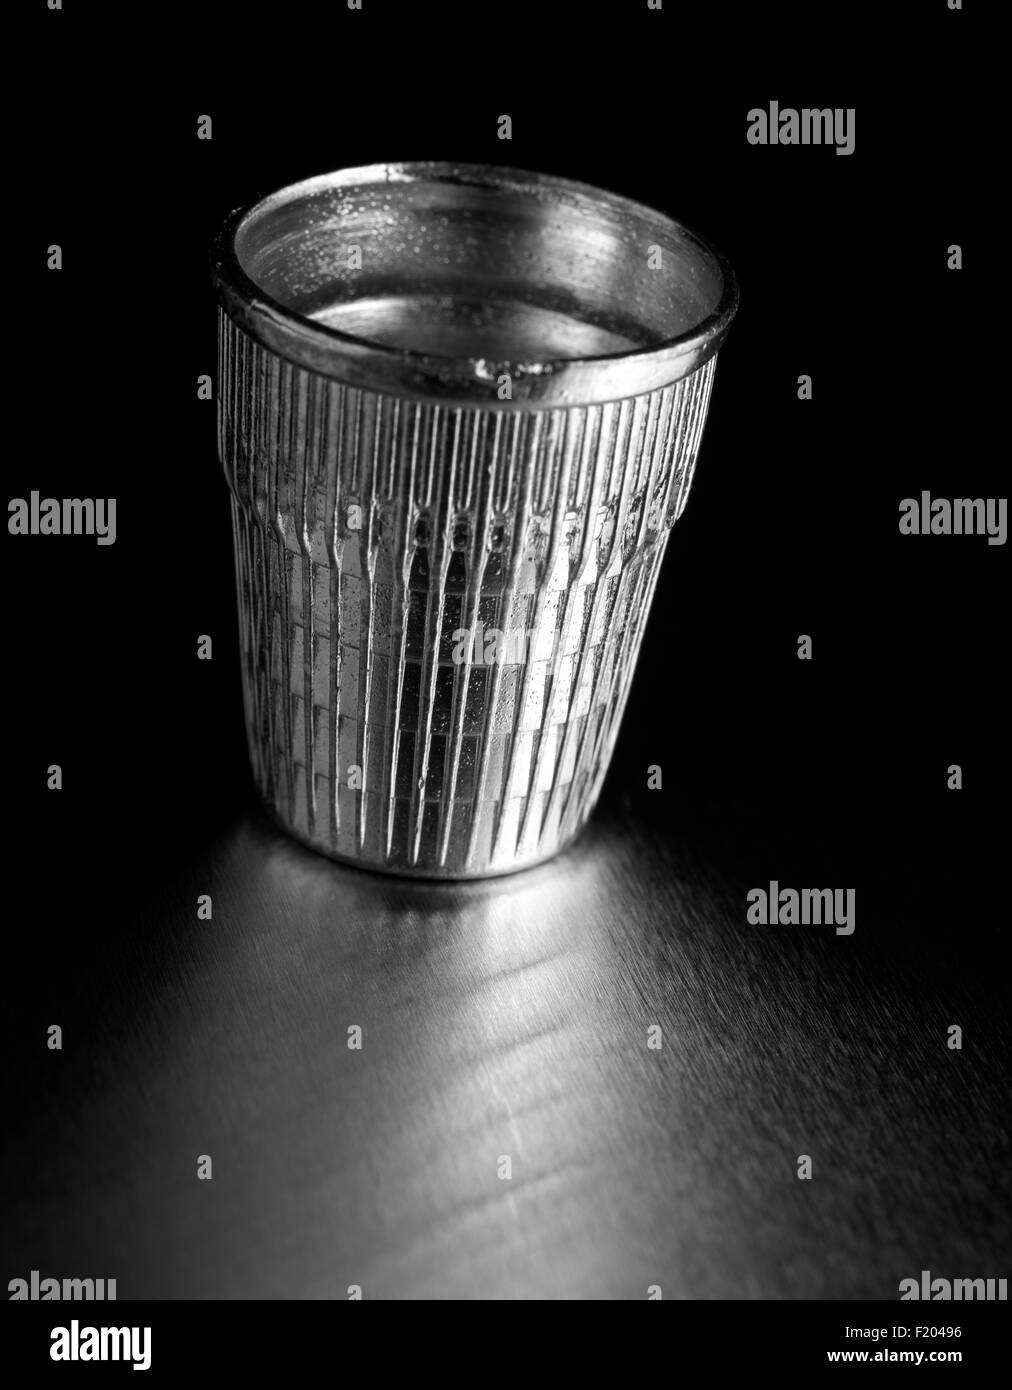 Silver thimble on black Stock Photo